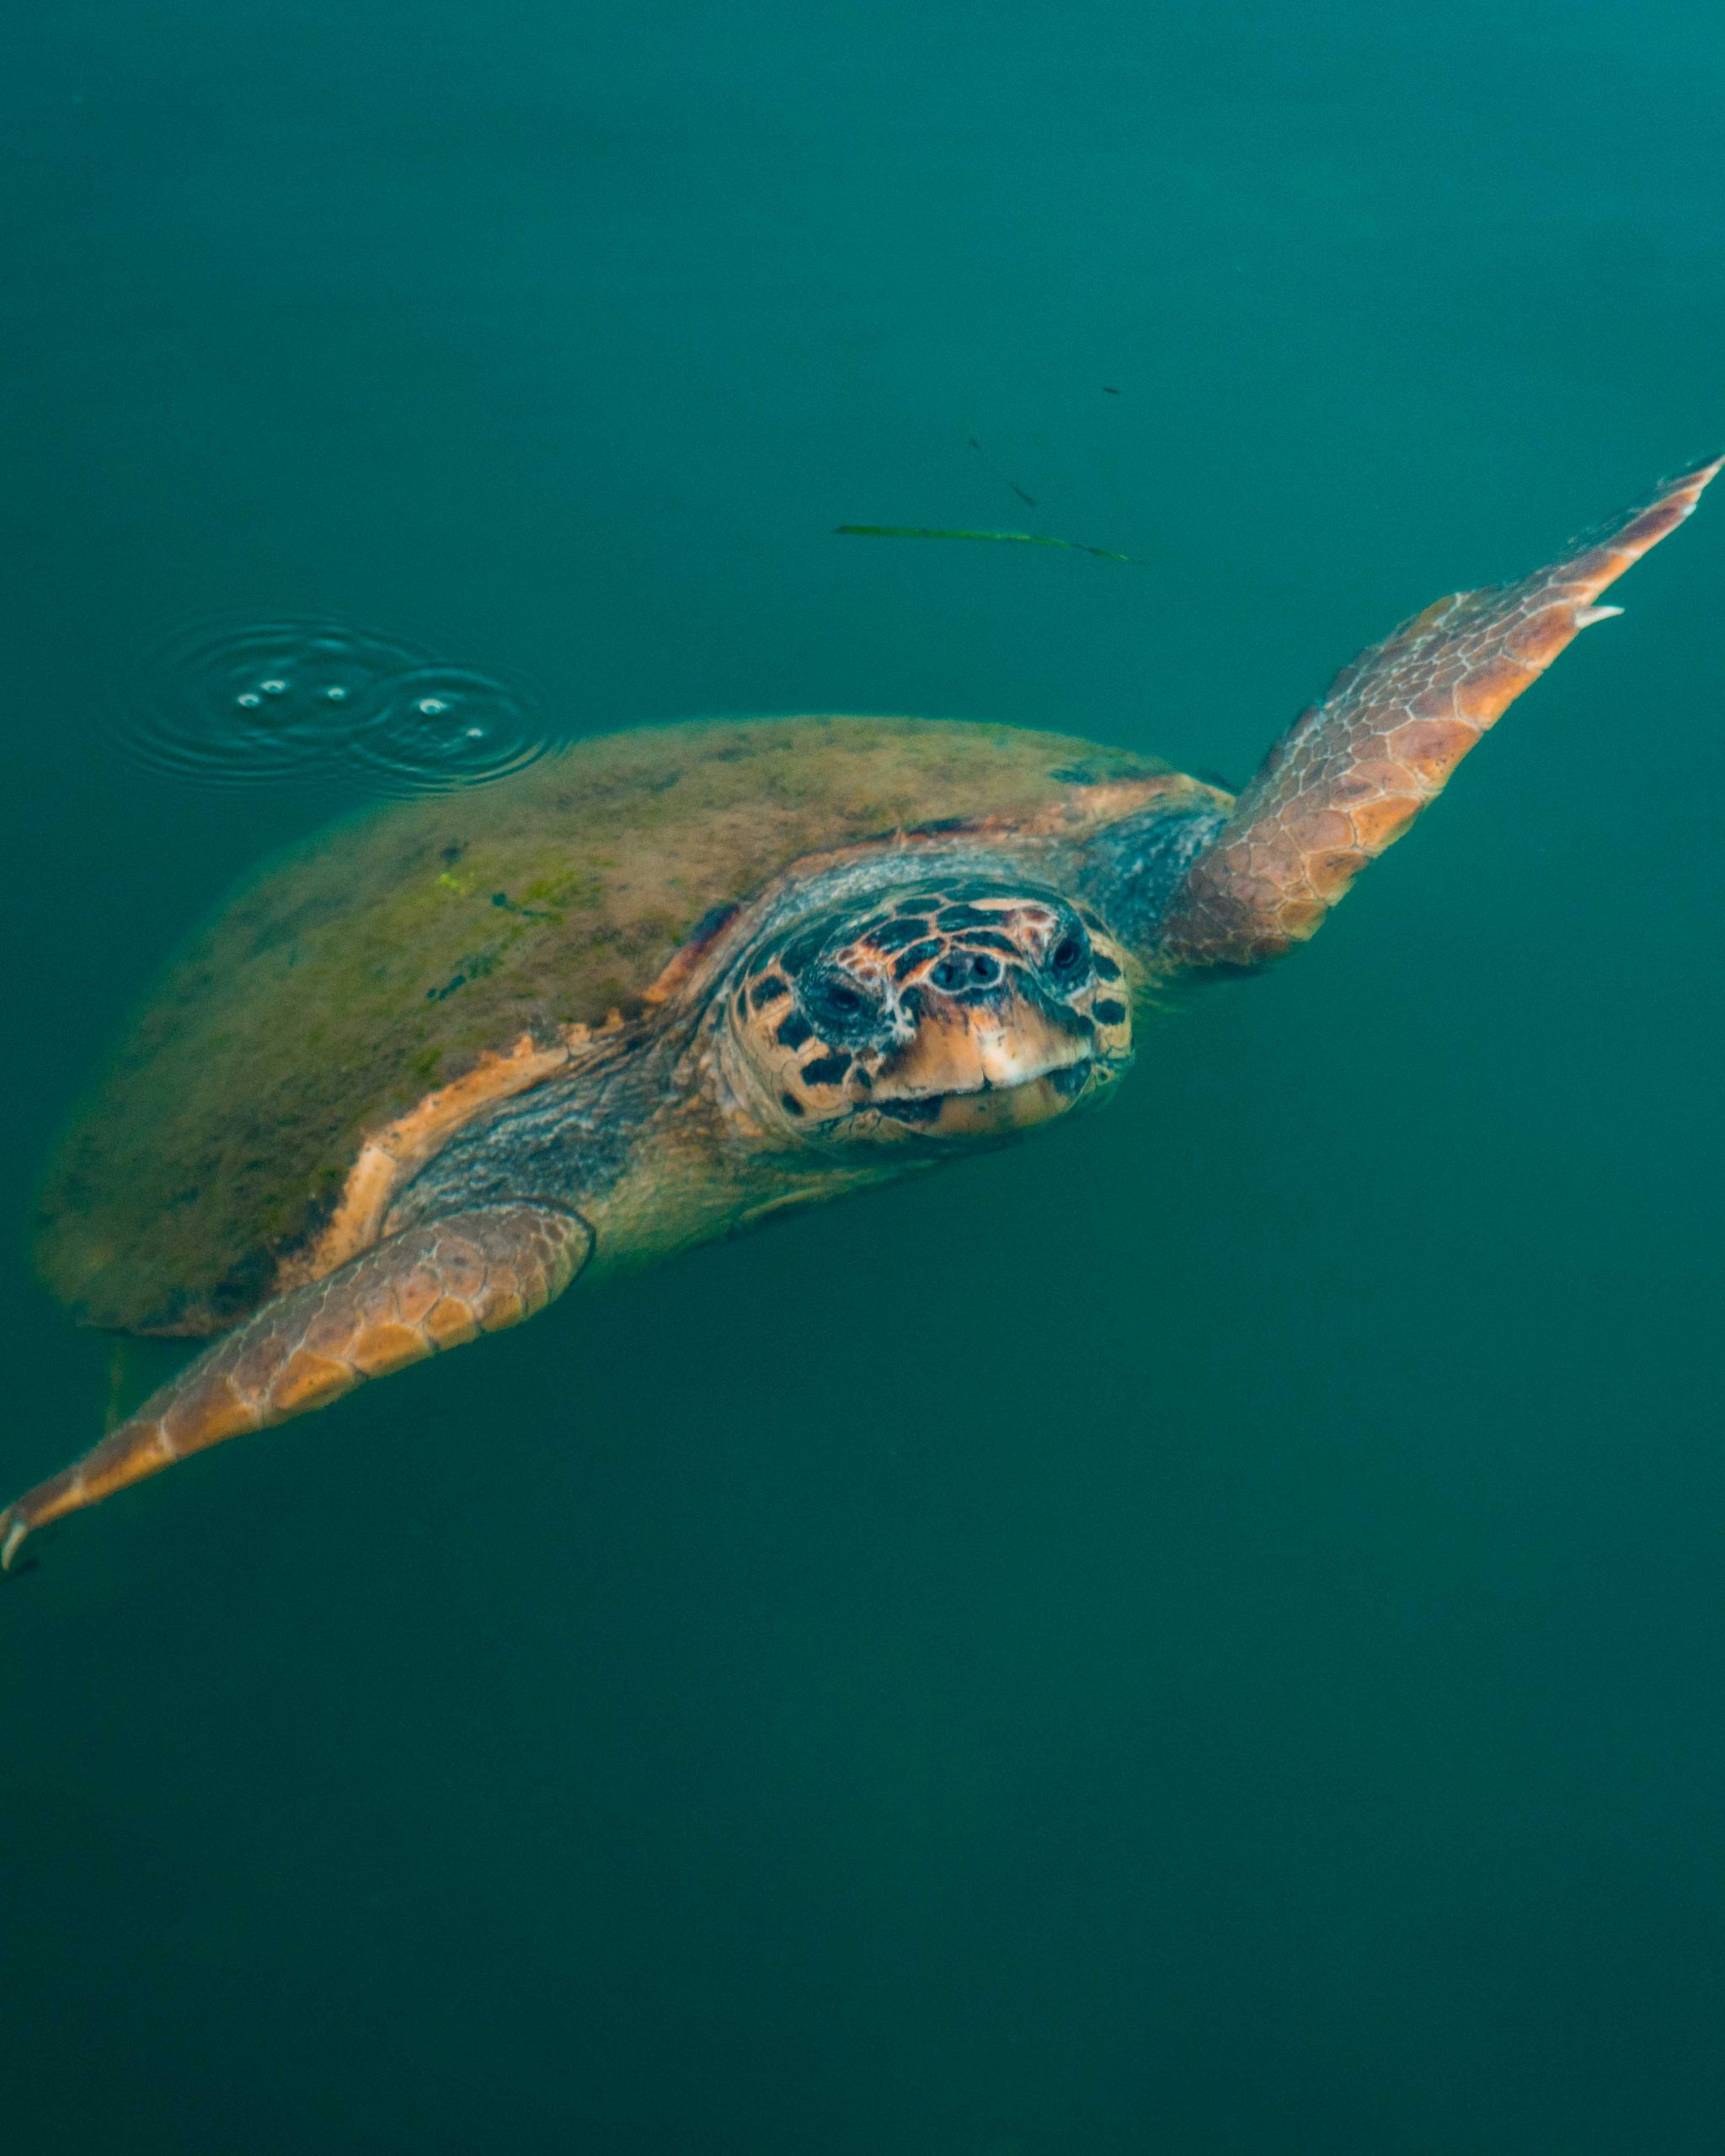 Chondrocephalus sea turtles (Caretta Caretta) in Kefalonia